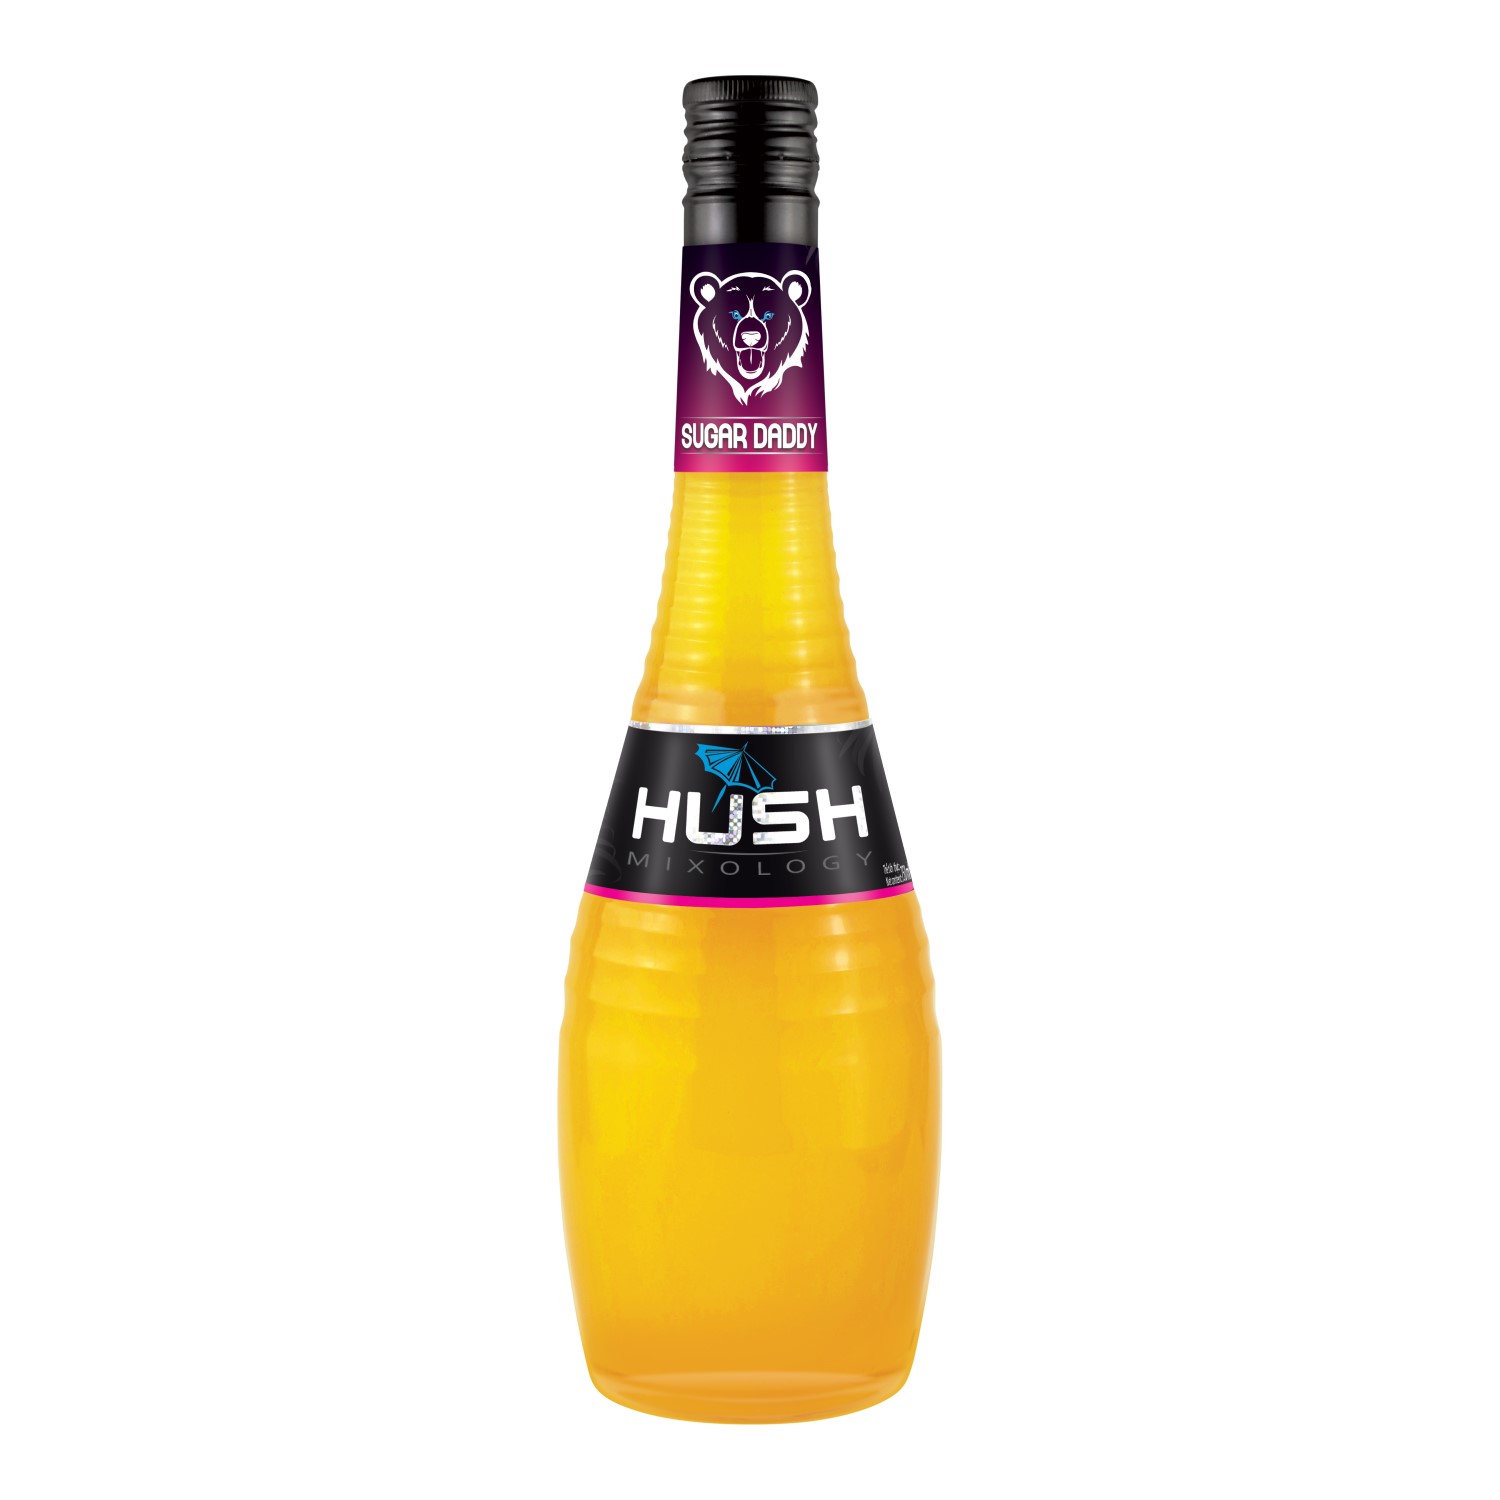 Hush Cocktail Mix Sugar Daddy